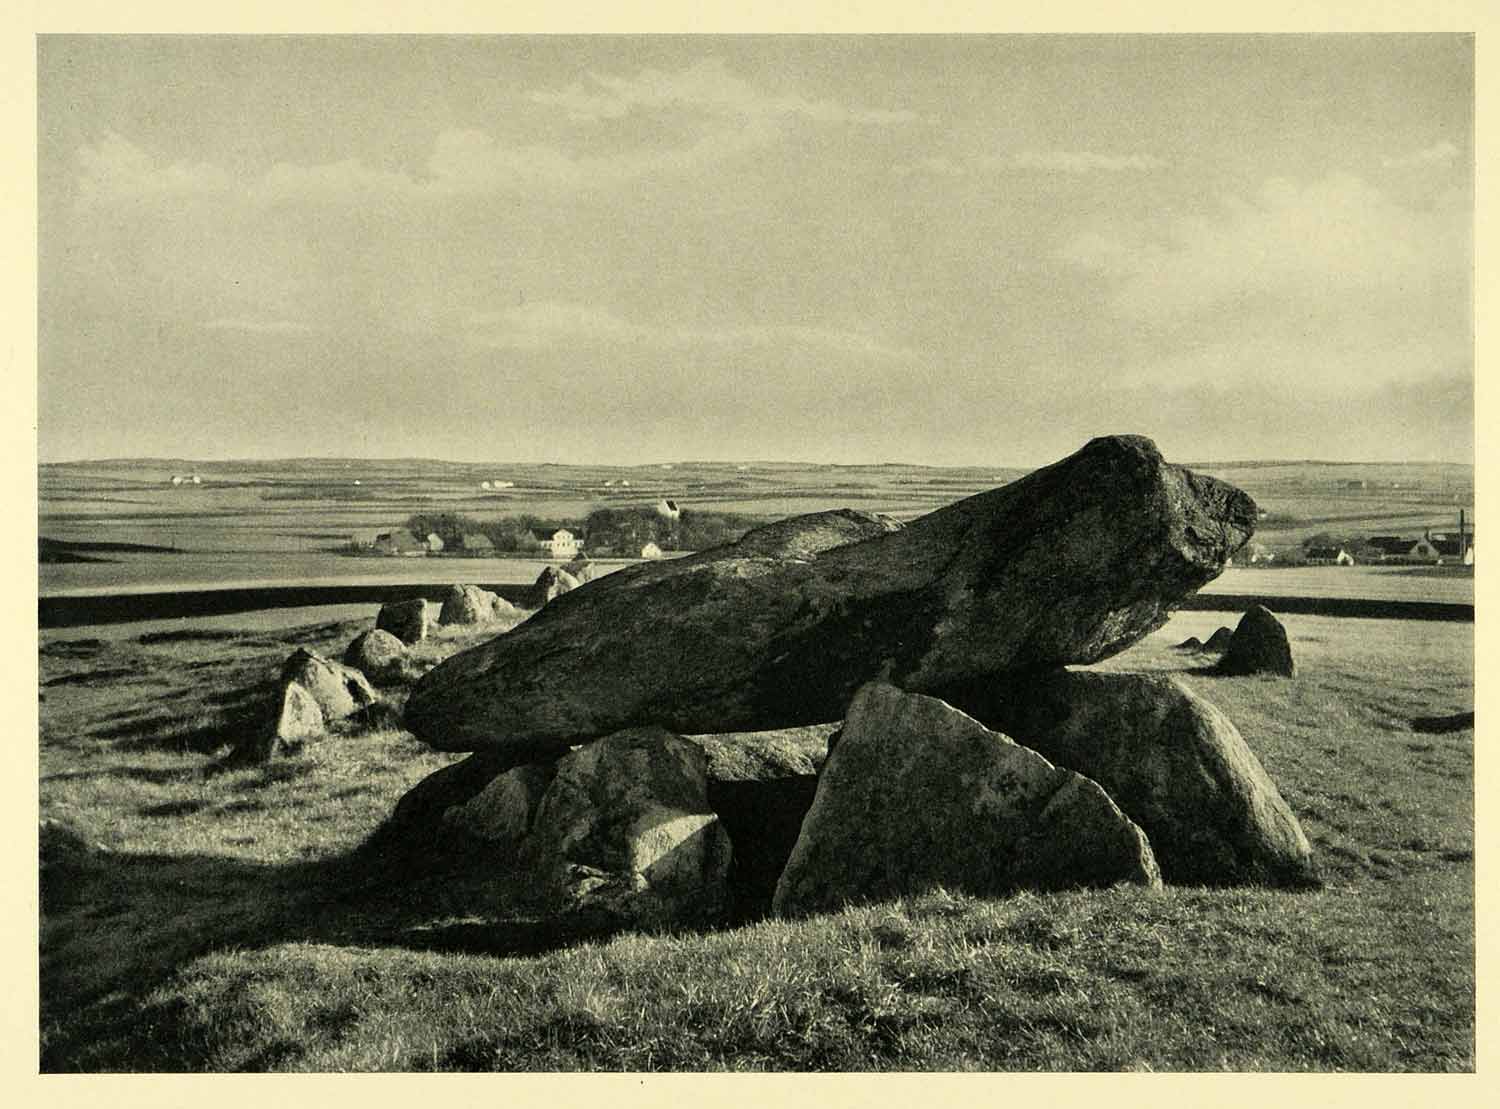 1949 Print Aalborg Jutland Denmark Neolithic Stones Rock Formation Ancient XGH9